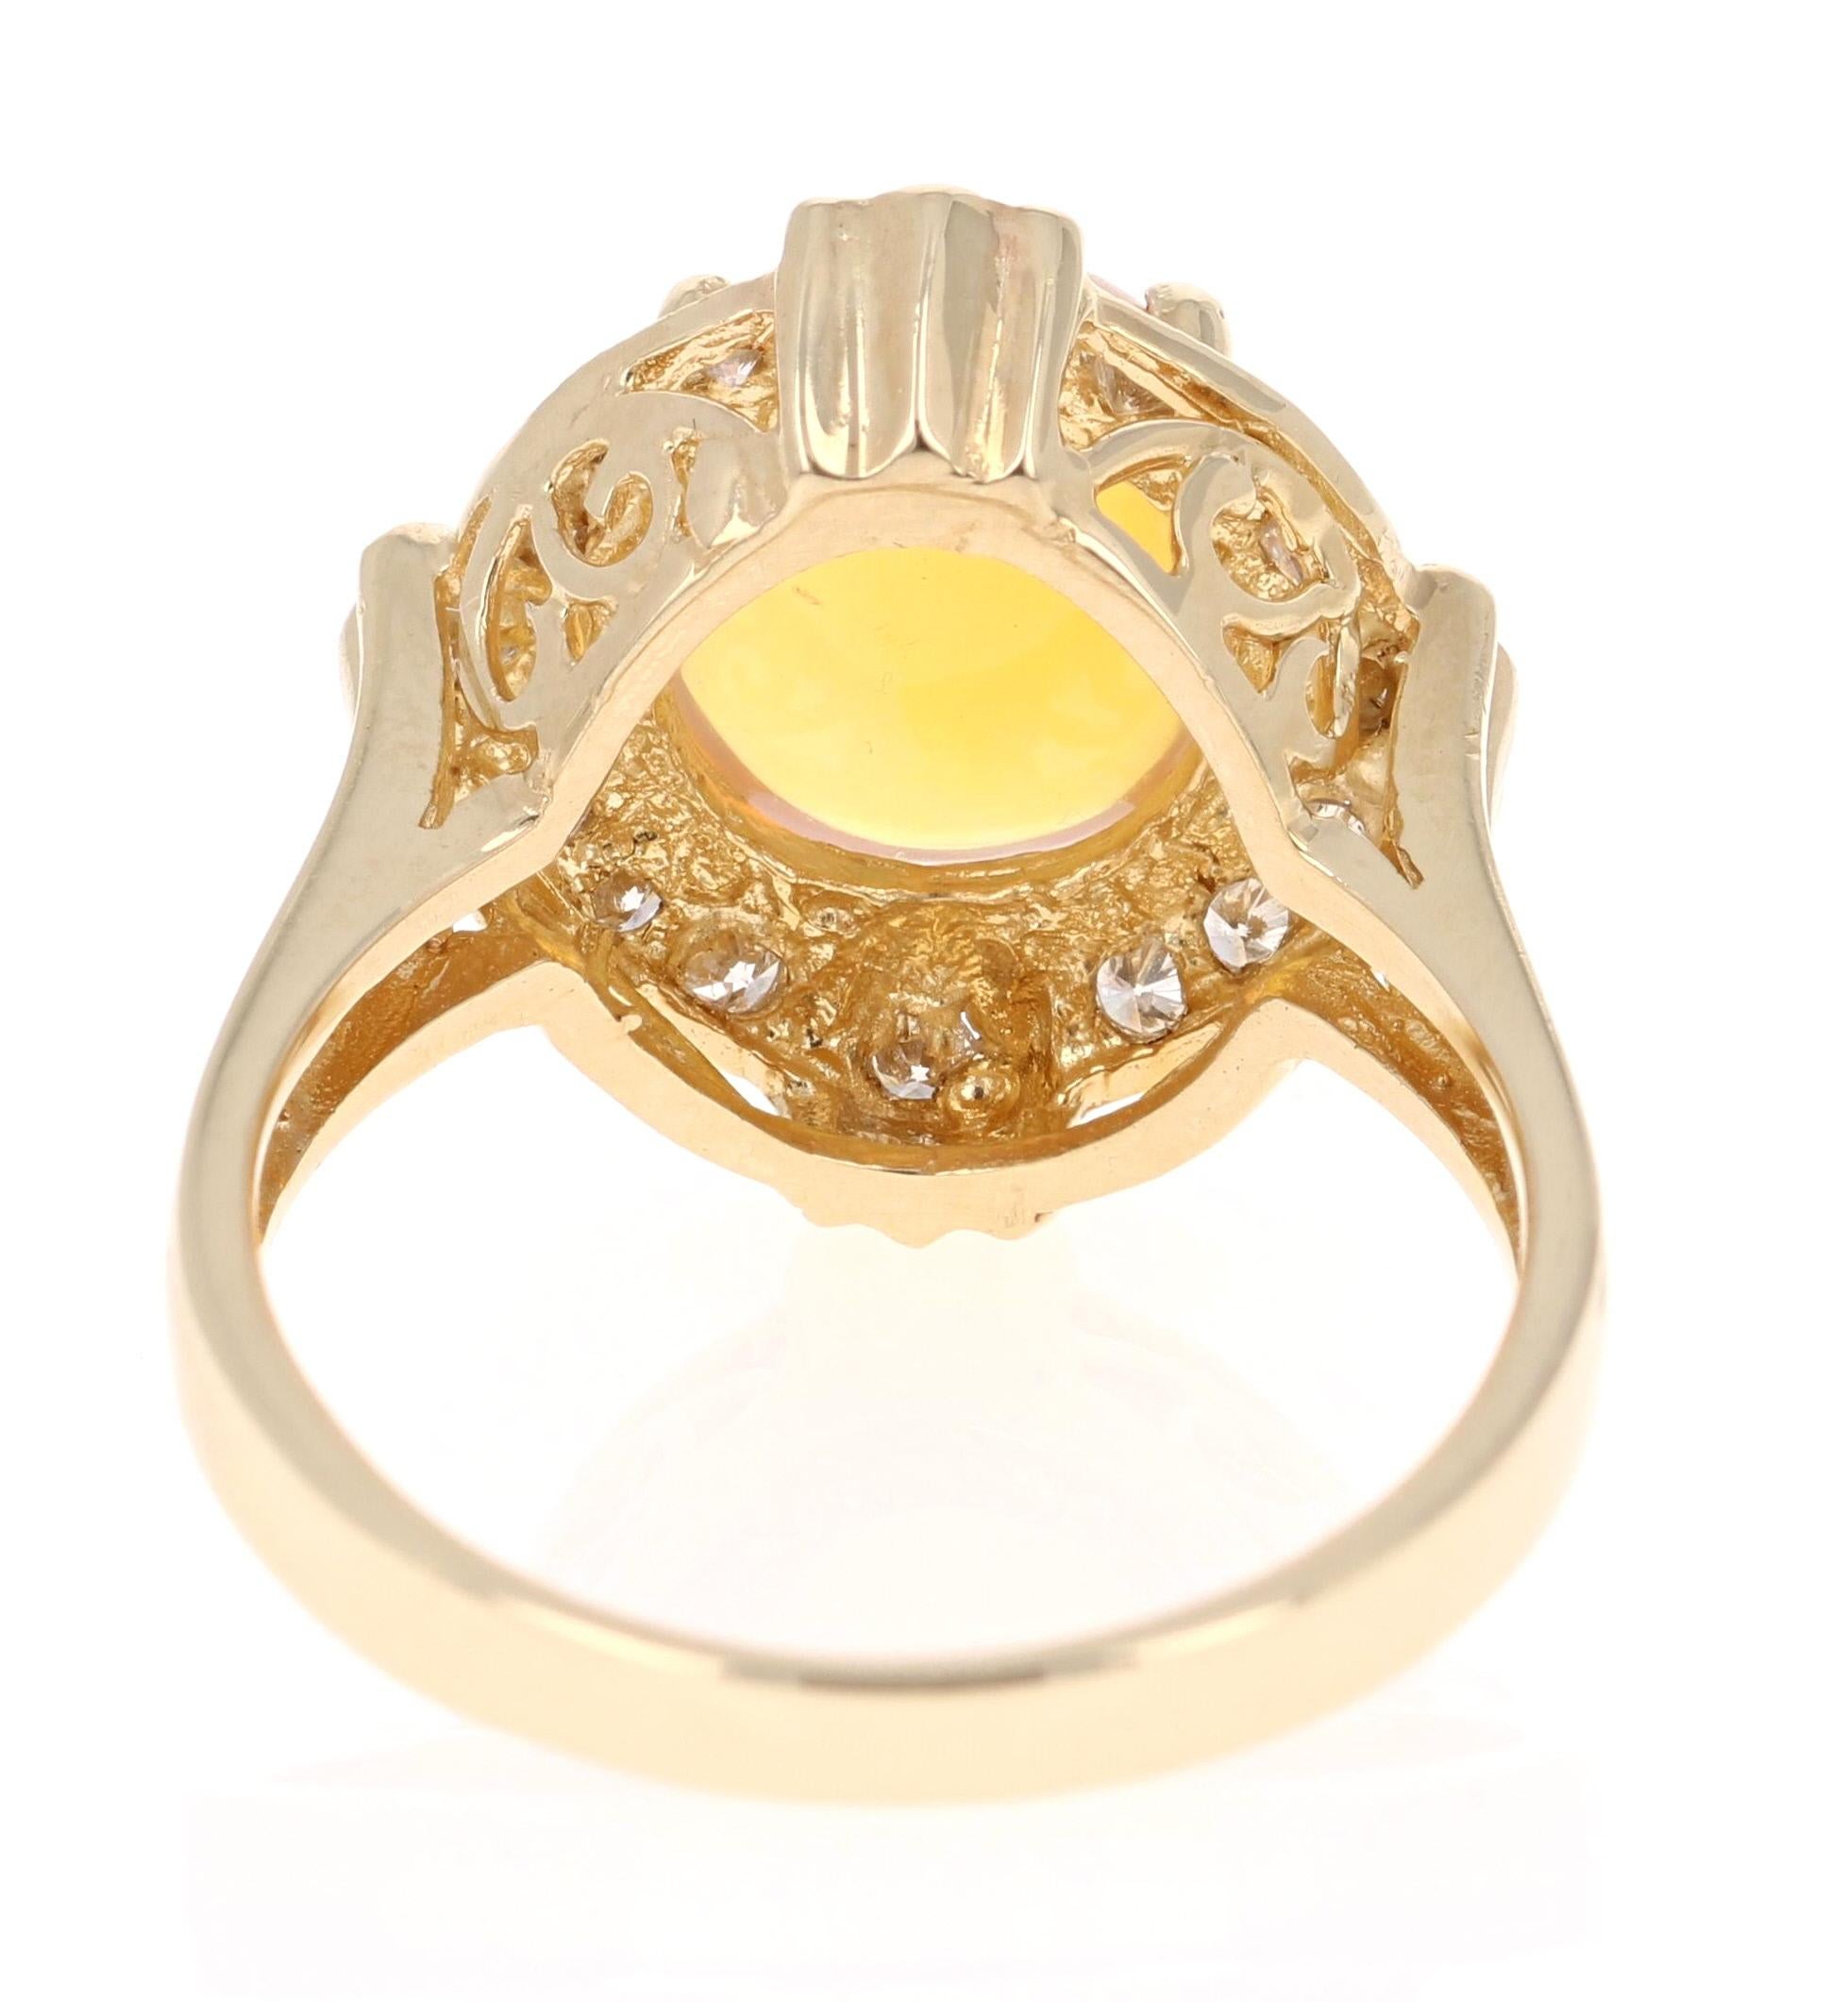 Oval Cut 2.92 Carat Opal Diamond 14 Karat Yellow Gold Ring